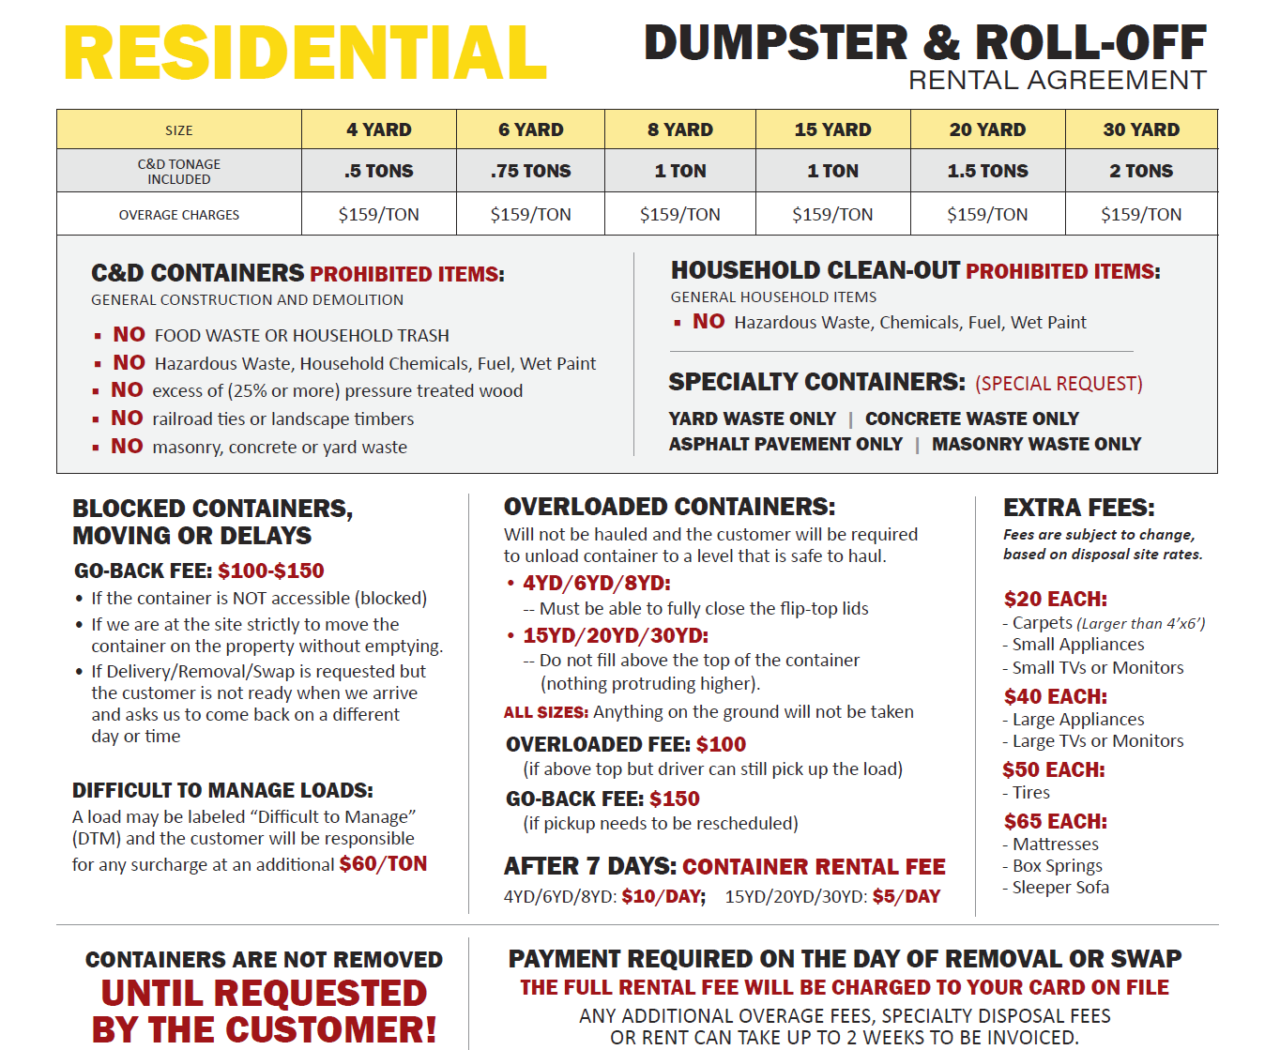 Residential Dumpster Rental Agreement Nauset Disposal